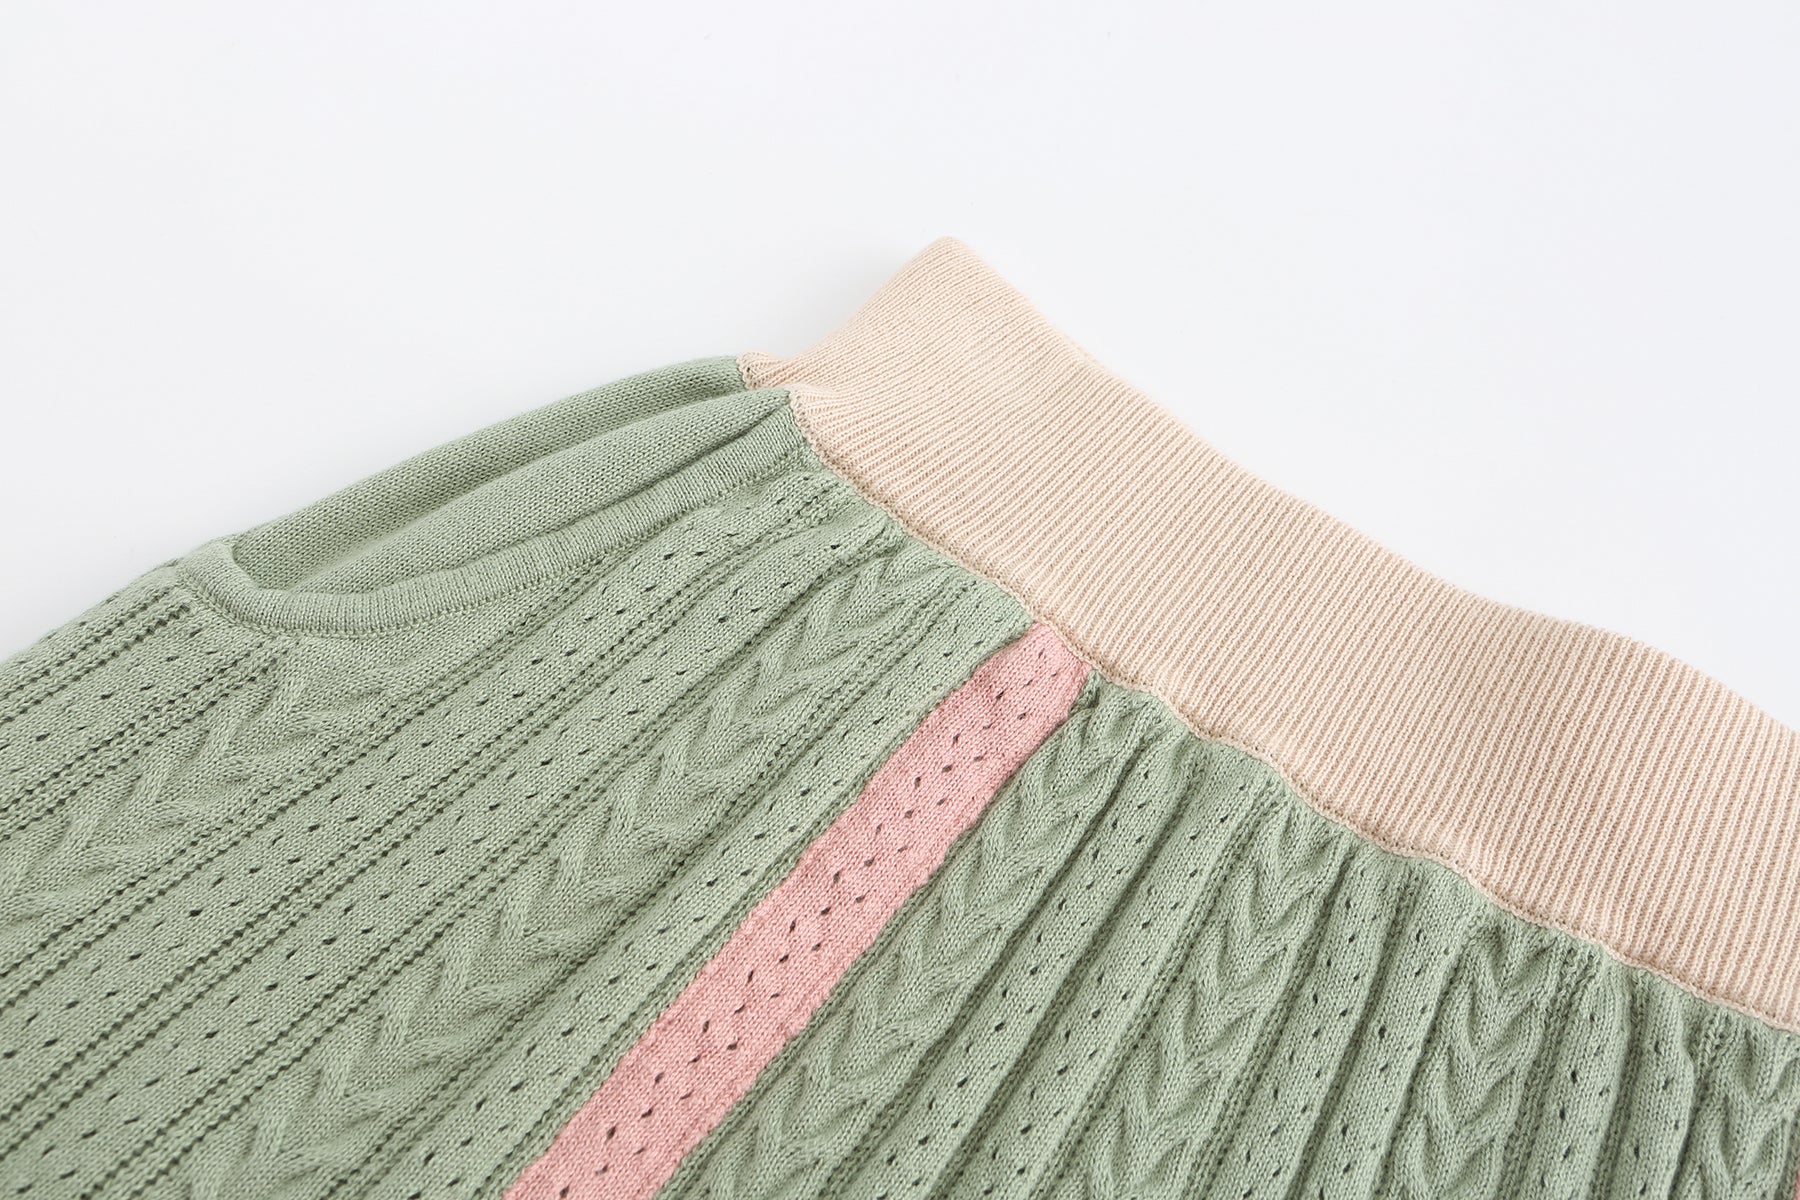 Knit Skirt - Green Tea - 310MOOD